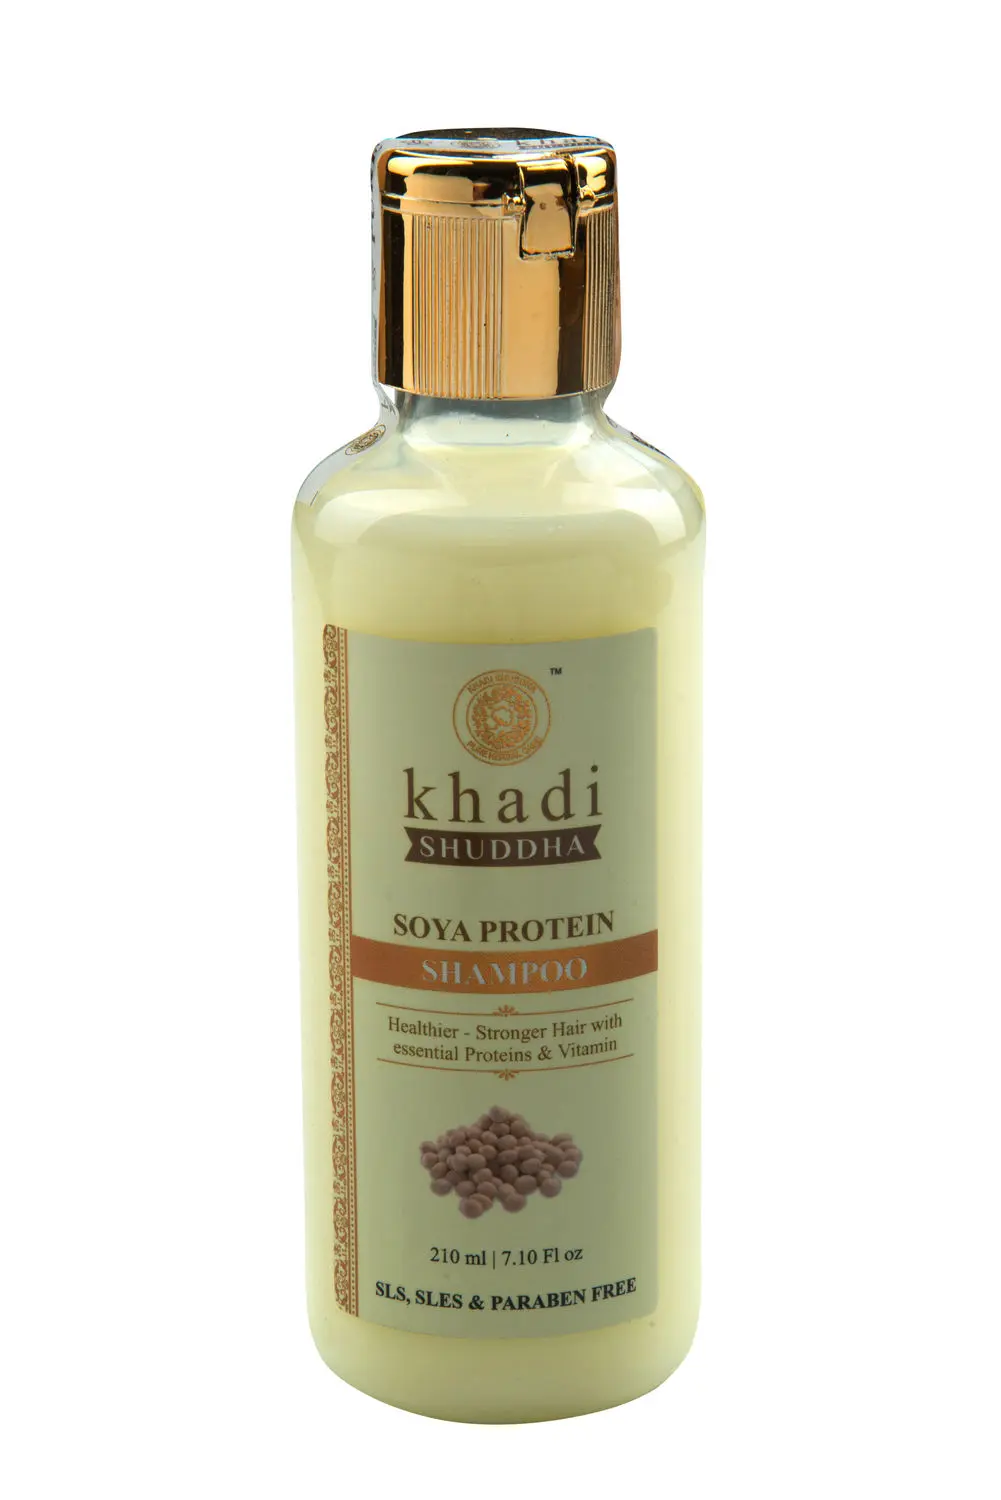 Khadi Shuddha Soya Protein Shampoo (210 ml)